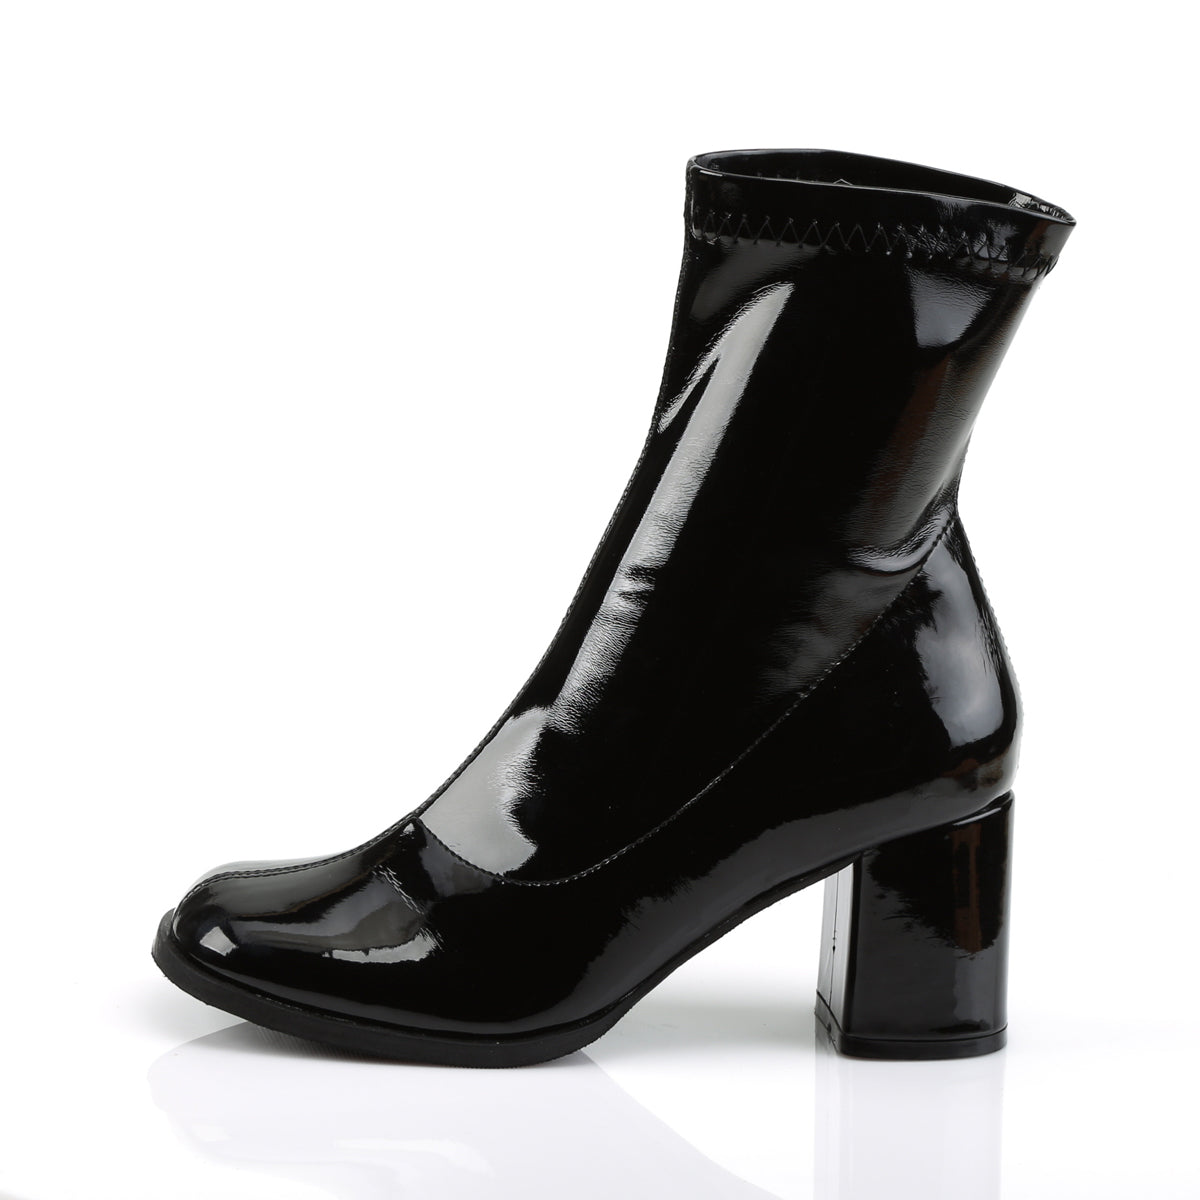 GOGO-150 3" Heel Black Stretch Women's Boots Funtasma Costume Shoes 